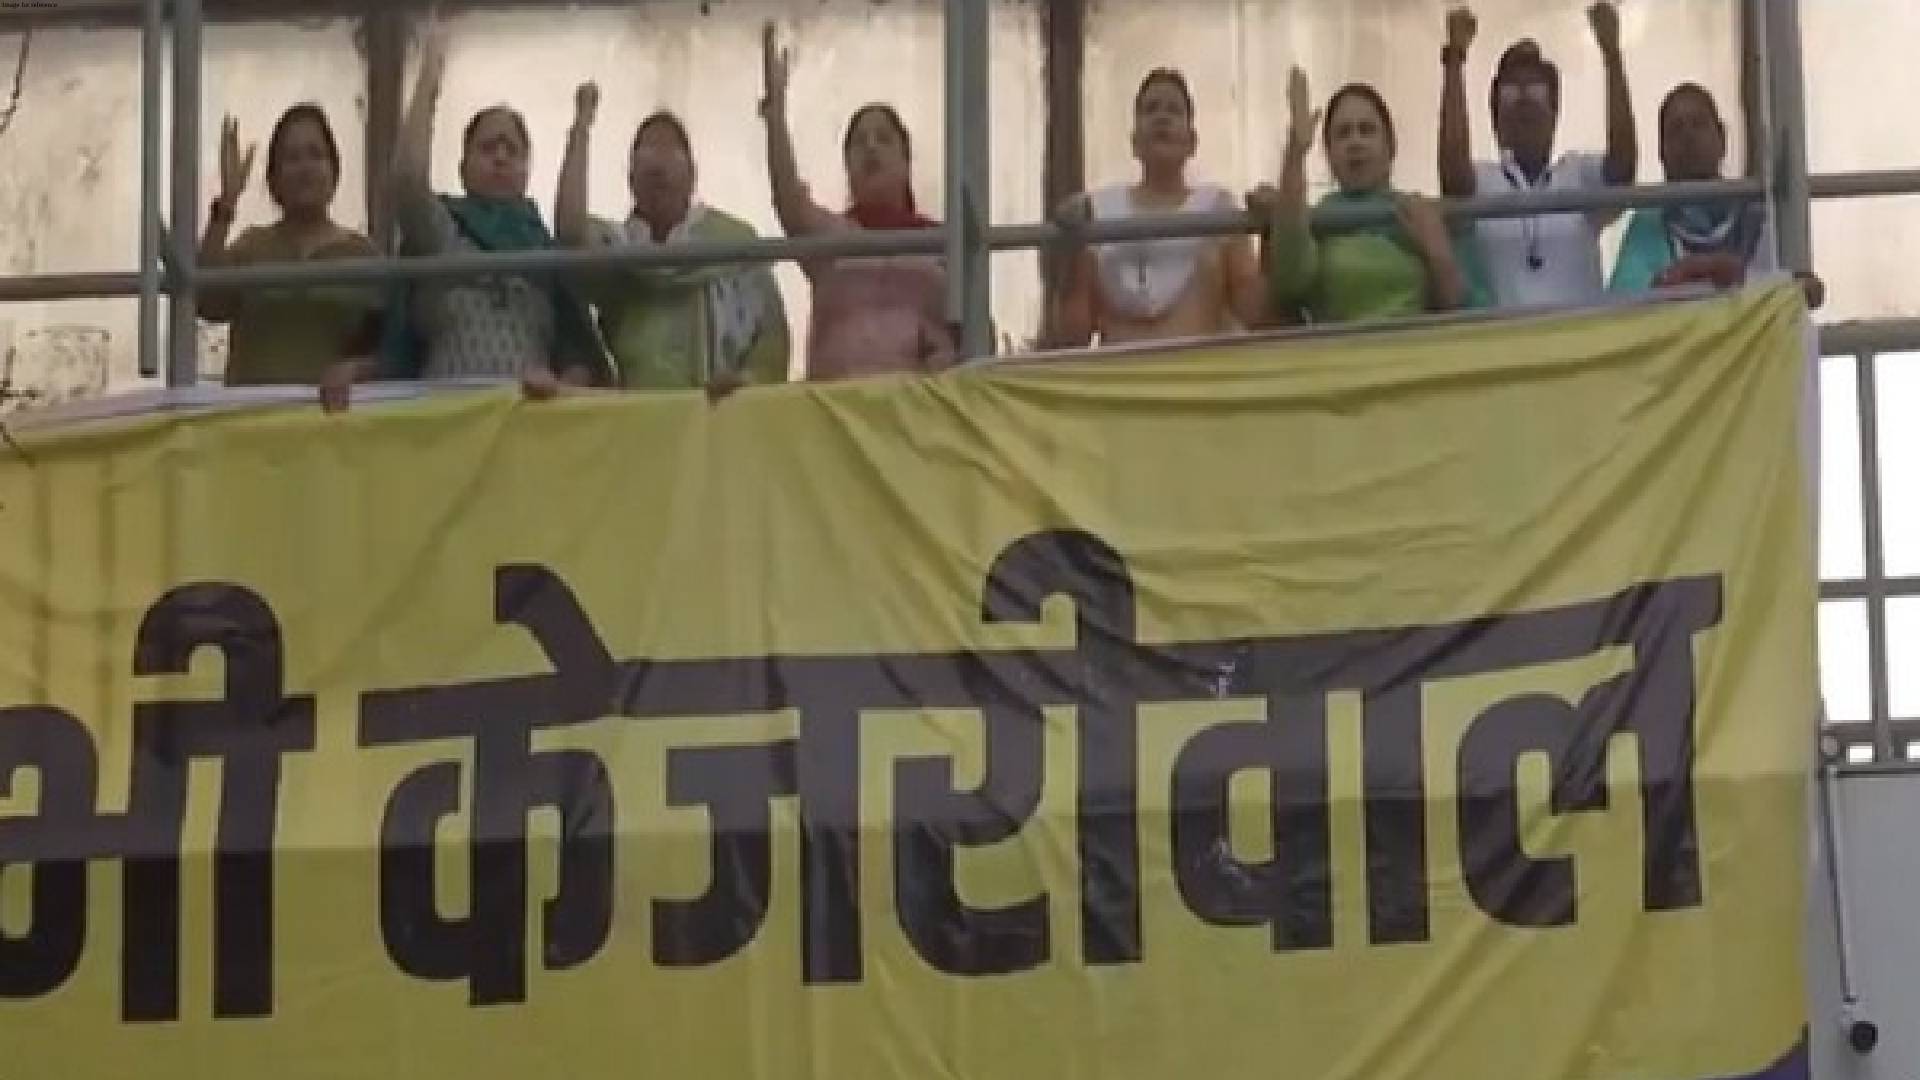 AAP workers stage protest against arrest of Delhi CM Kejriwal